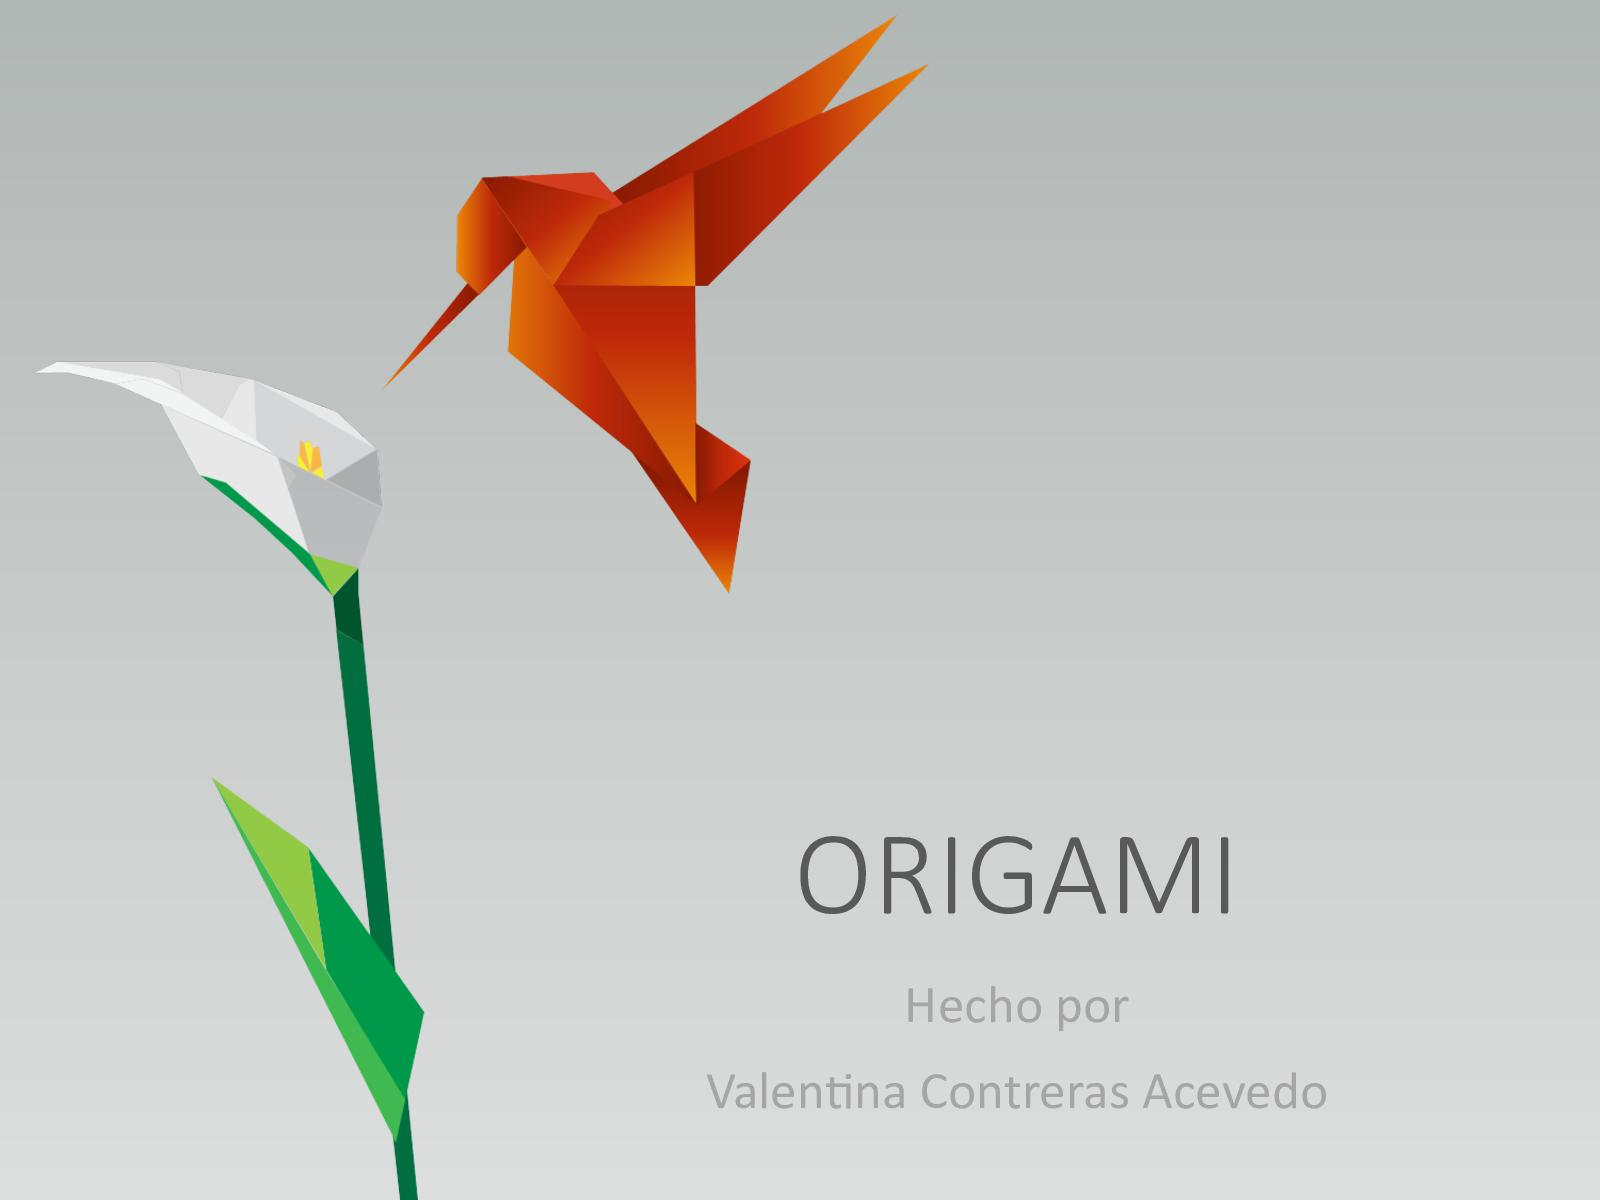 Фон для текста оригами